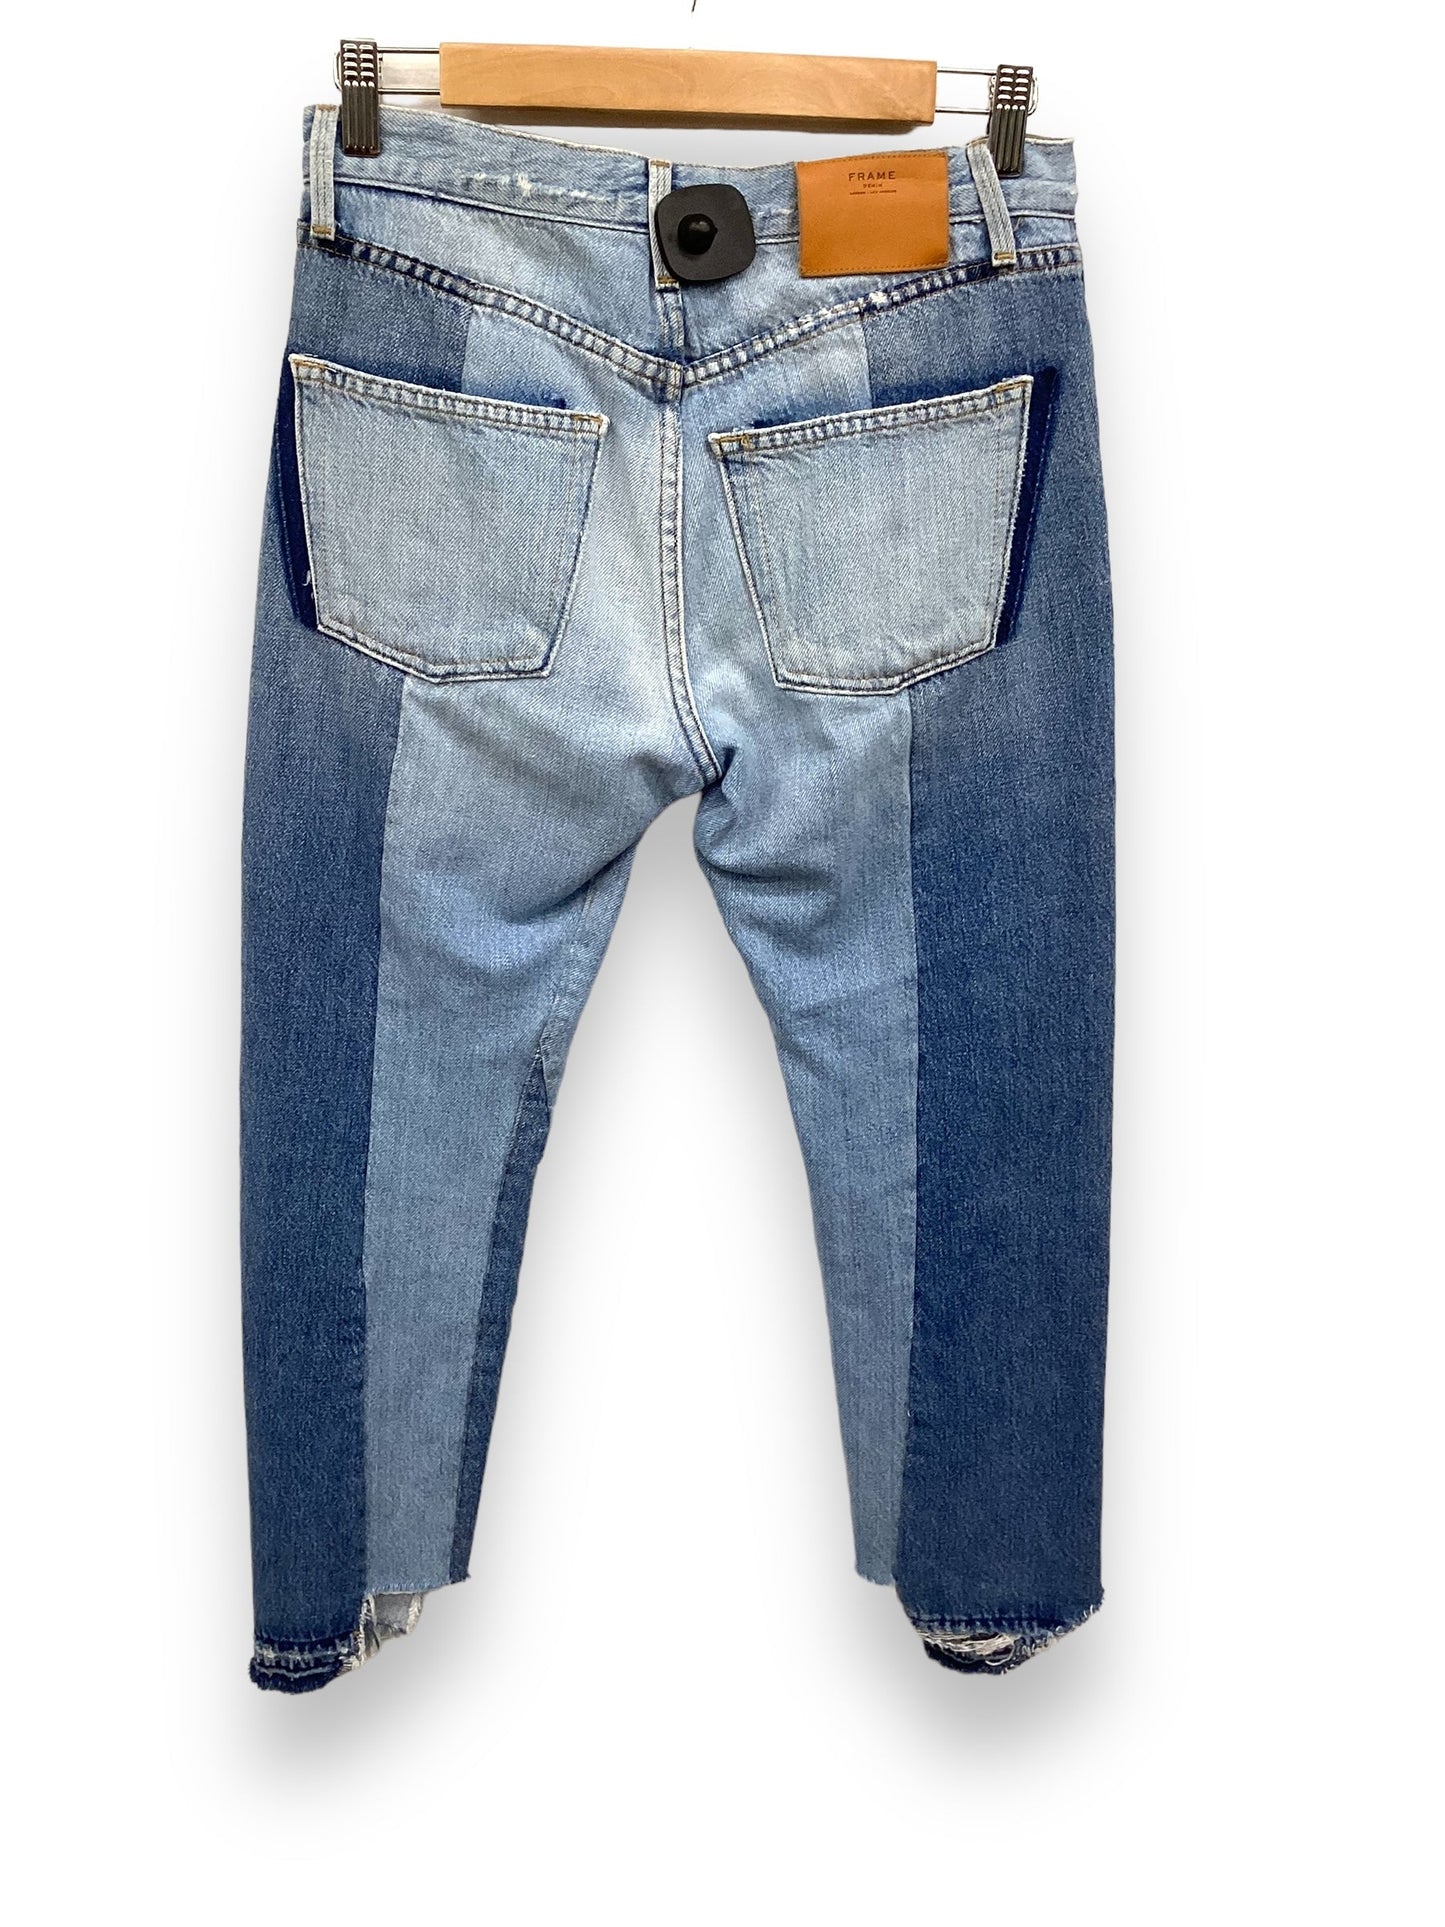 Denim Jeans Boot Cut Frame, Size 2